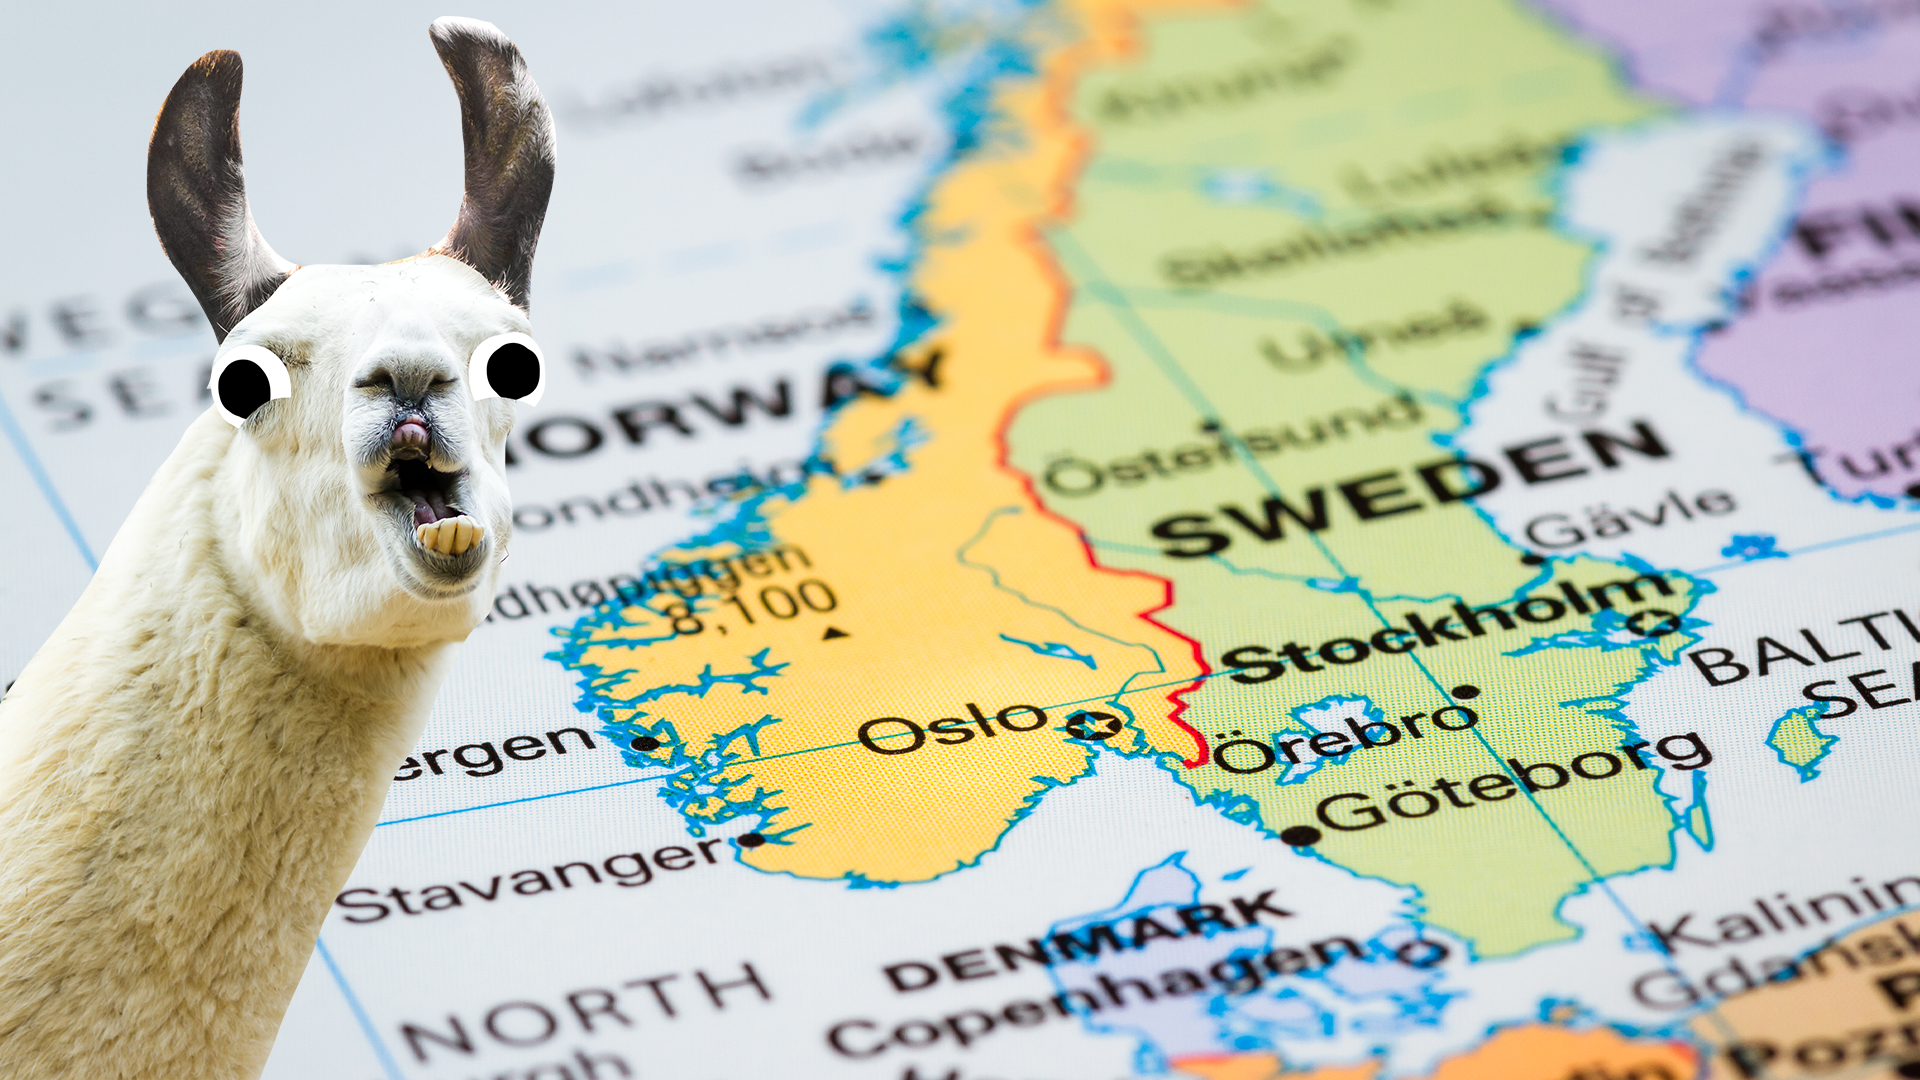 Map of Scandinavia and a derpy llama